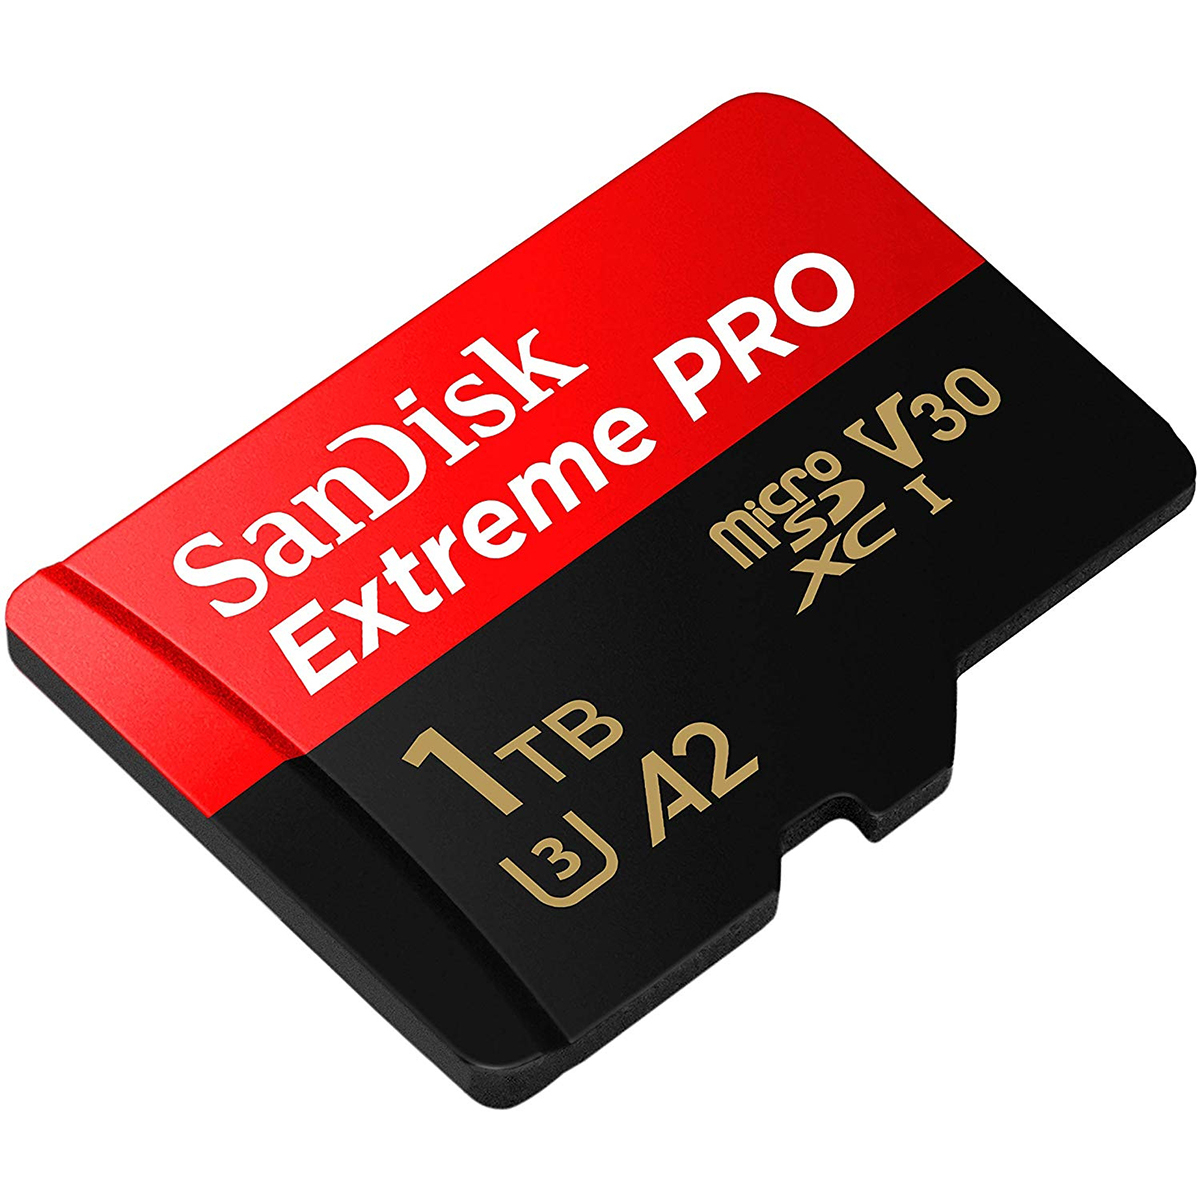 1TB SanDisk Extreme Pro MicroSDXC 200MB/s A2